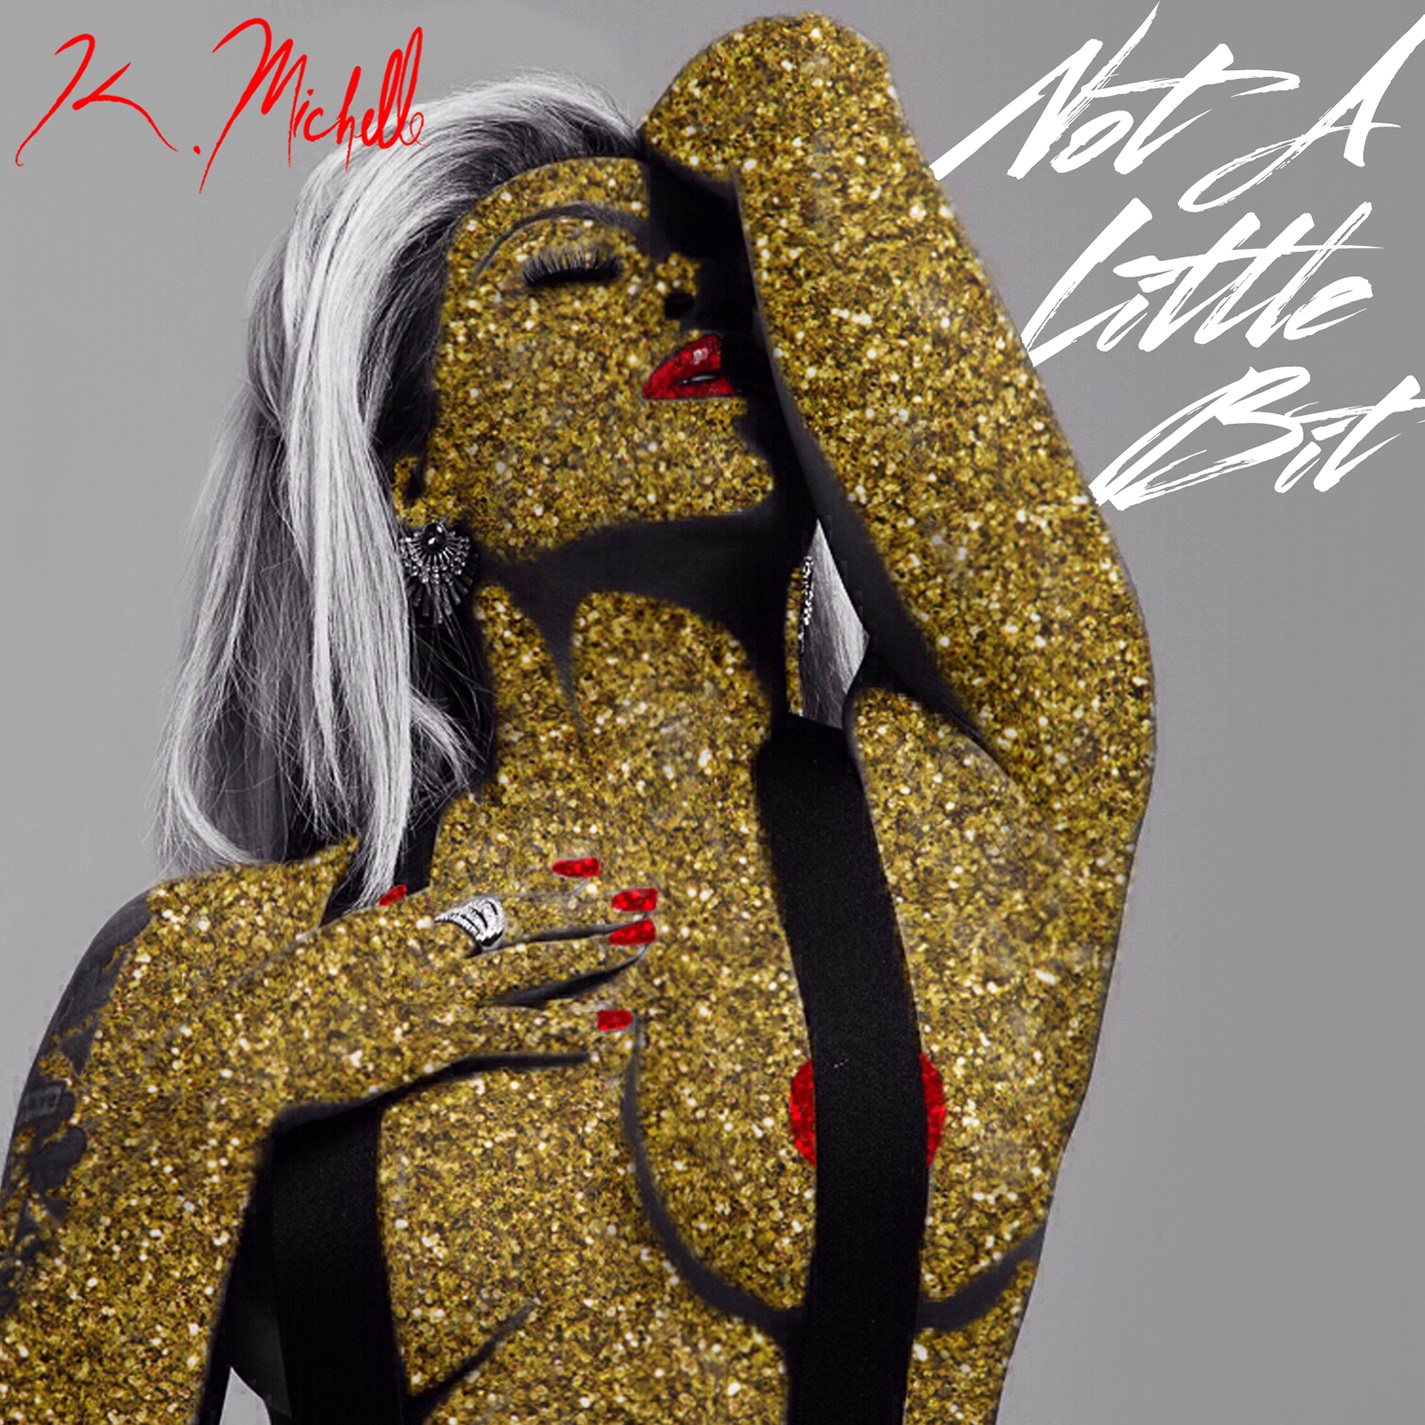 K. Michelle Releases New Single "Not A Little Bit"